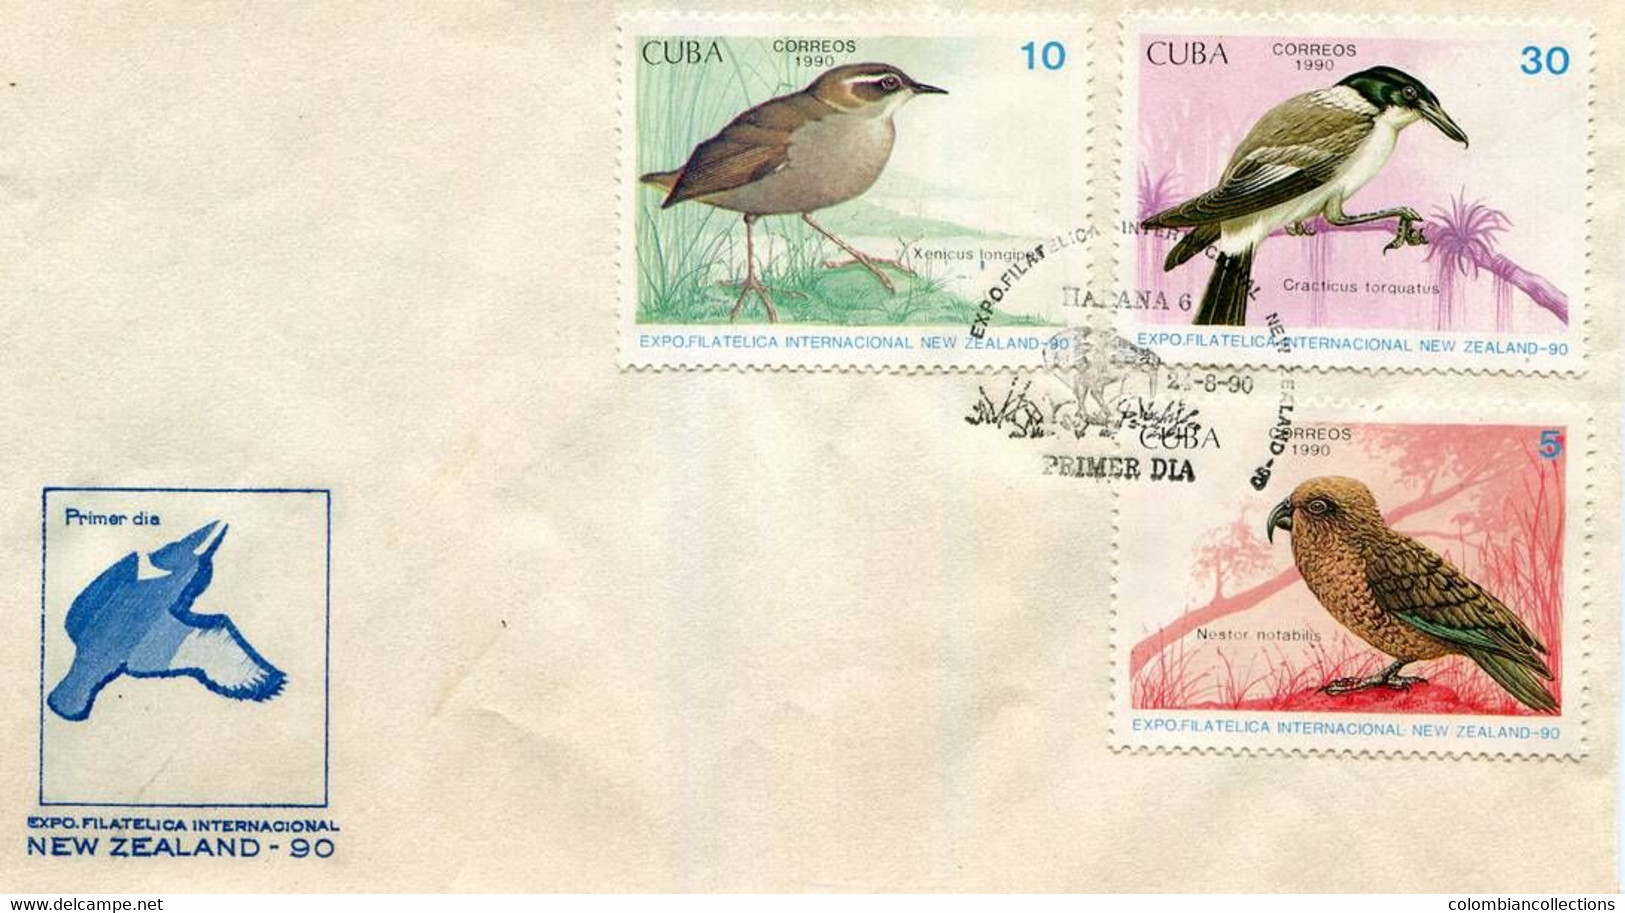 Lote CU1990-4F, Cuba, 1990, 3 SPD-FDC, Expo Filatelica Internacional New Zealand, Bird - FDC